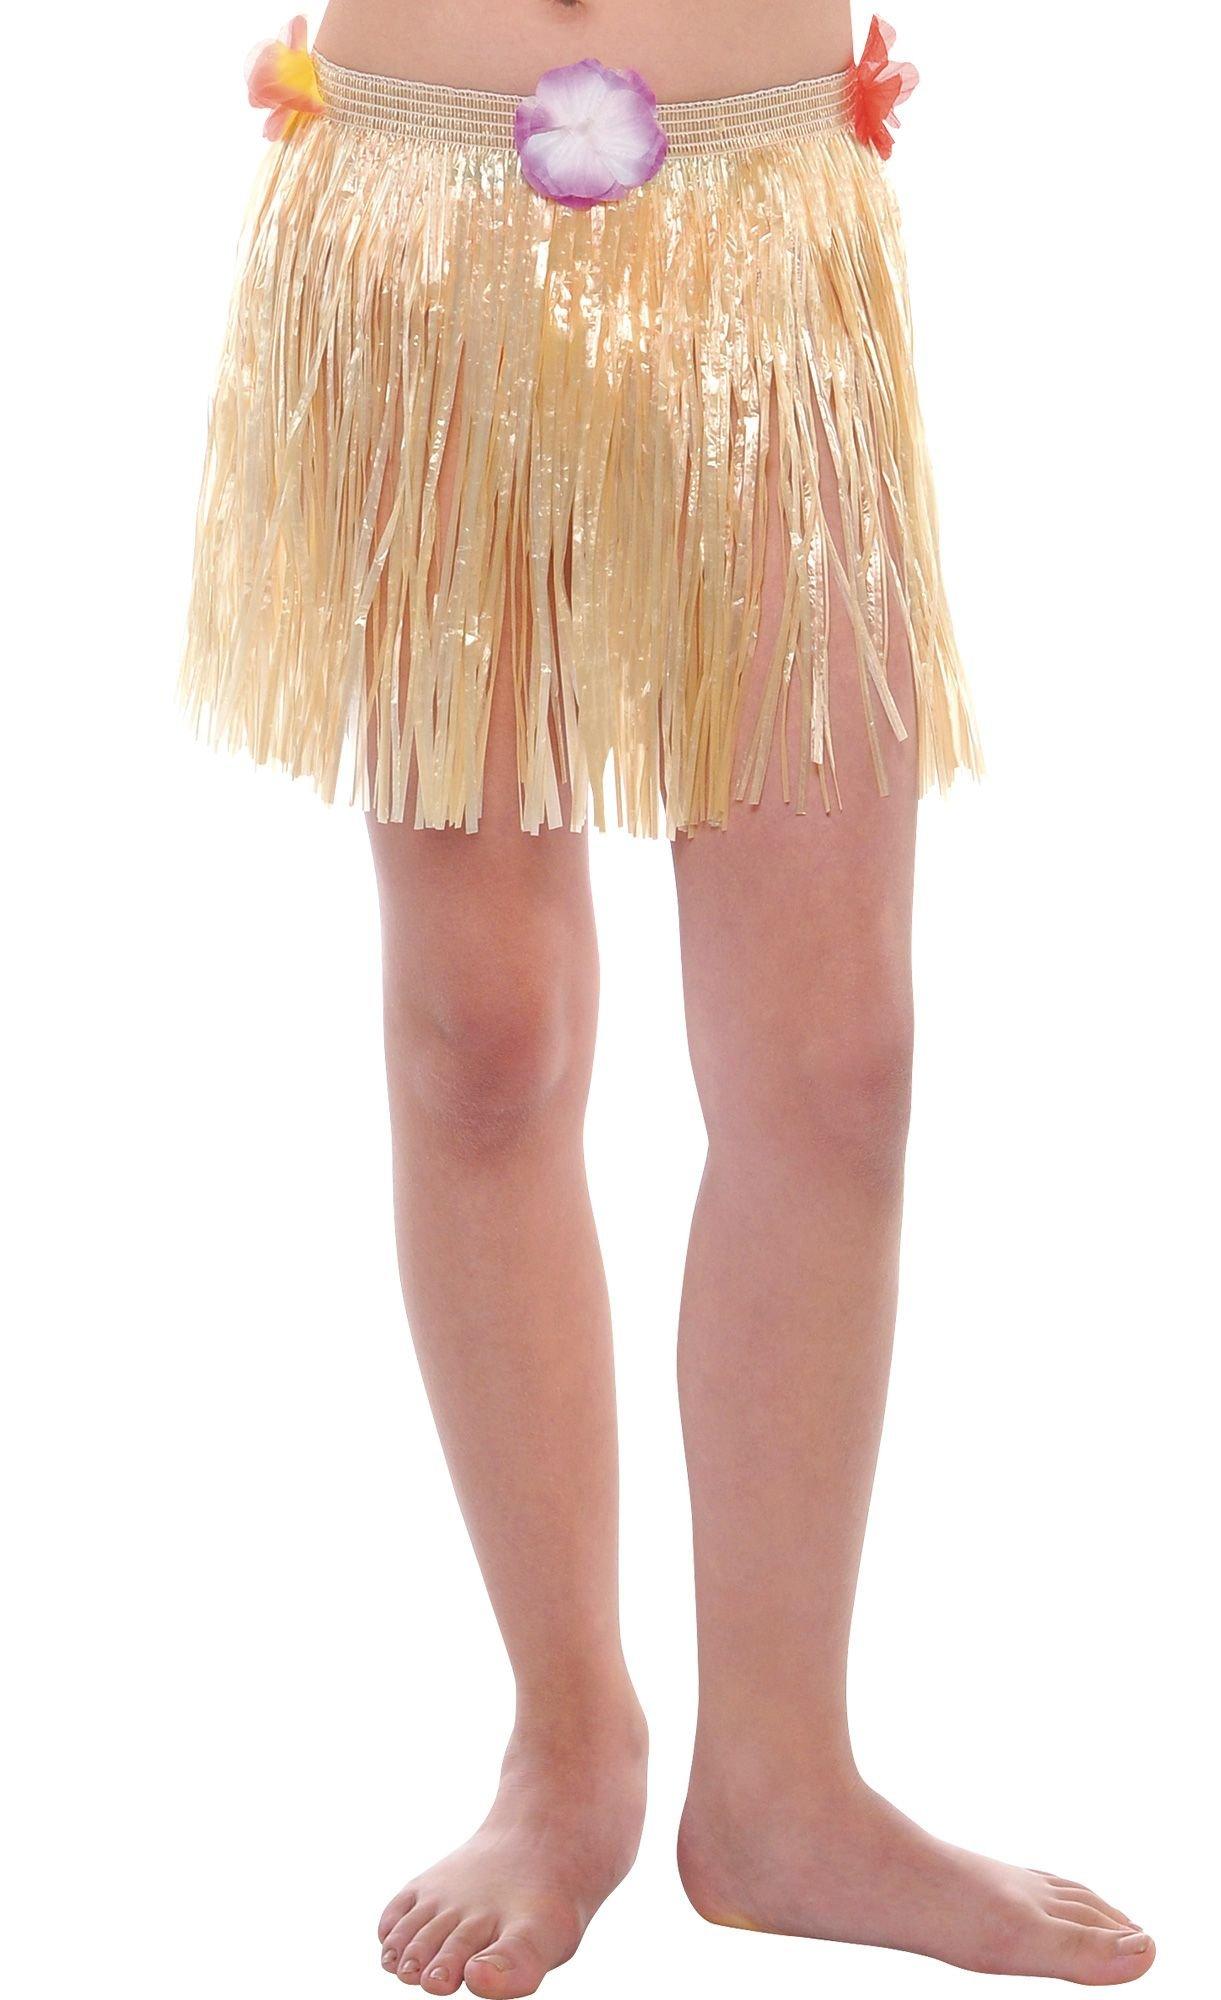  120 Pcs Hawaiian Hula Grass Skirt Set Aloha Hawaiian Costume  Include Luau Skirt Tropical Lei Wristband Plumeria Hair Clip Grass Skirt  Tropical Beach Party Outfit for Girls Women Dance Party Supplies 